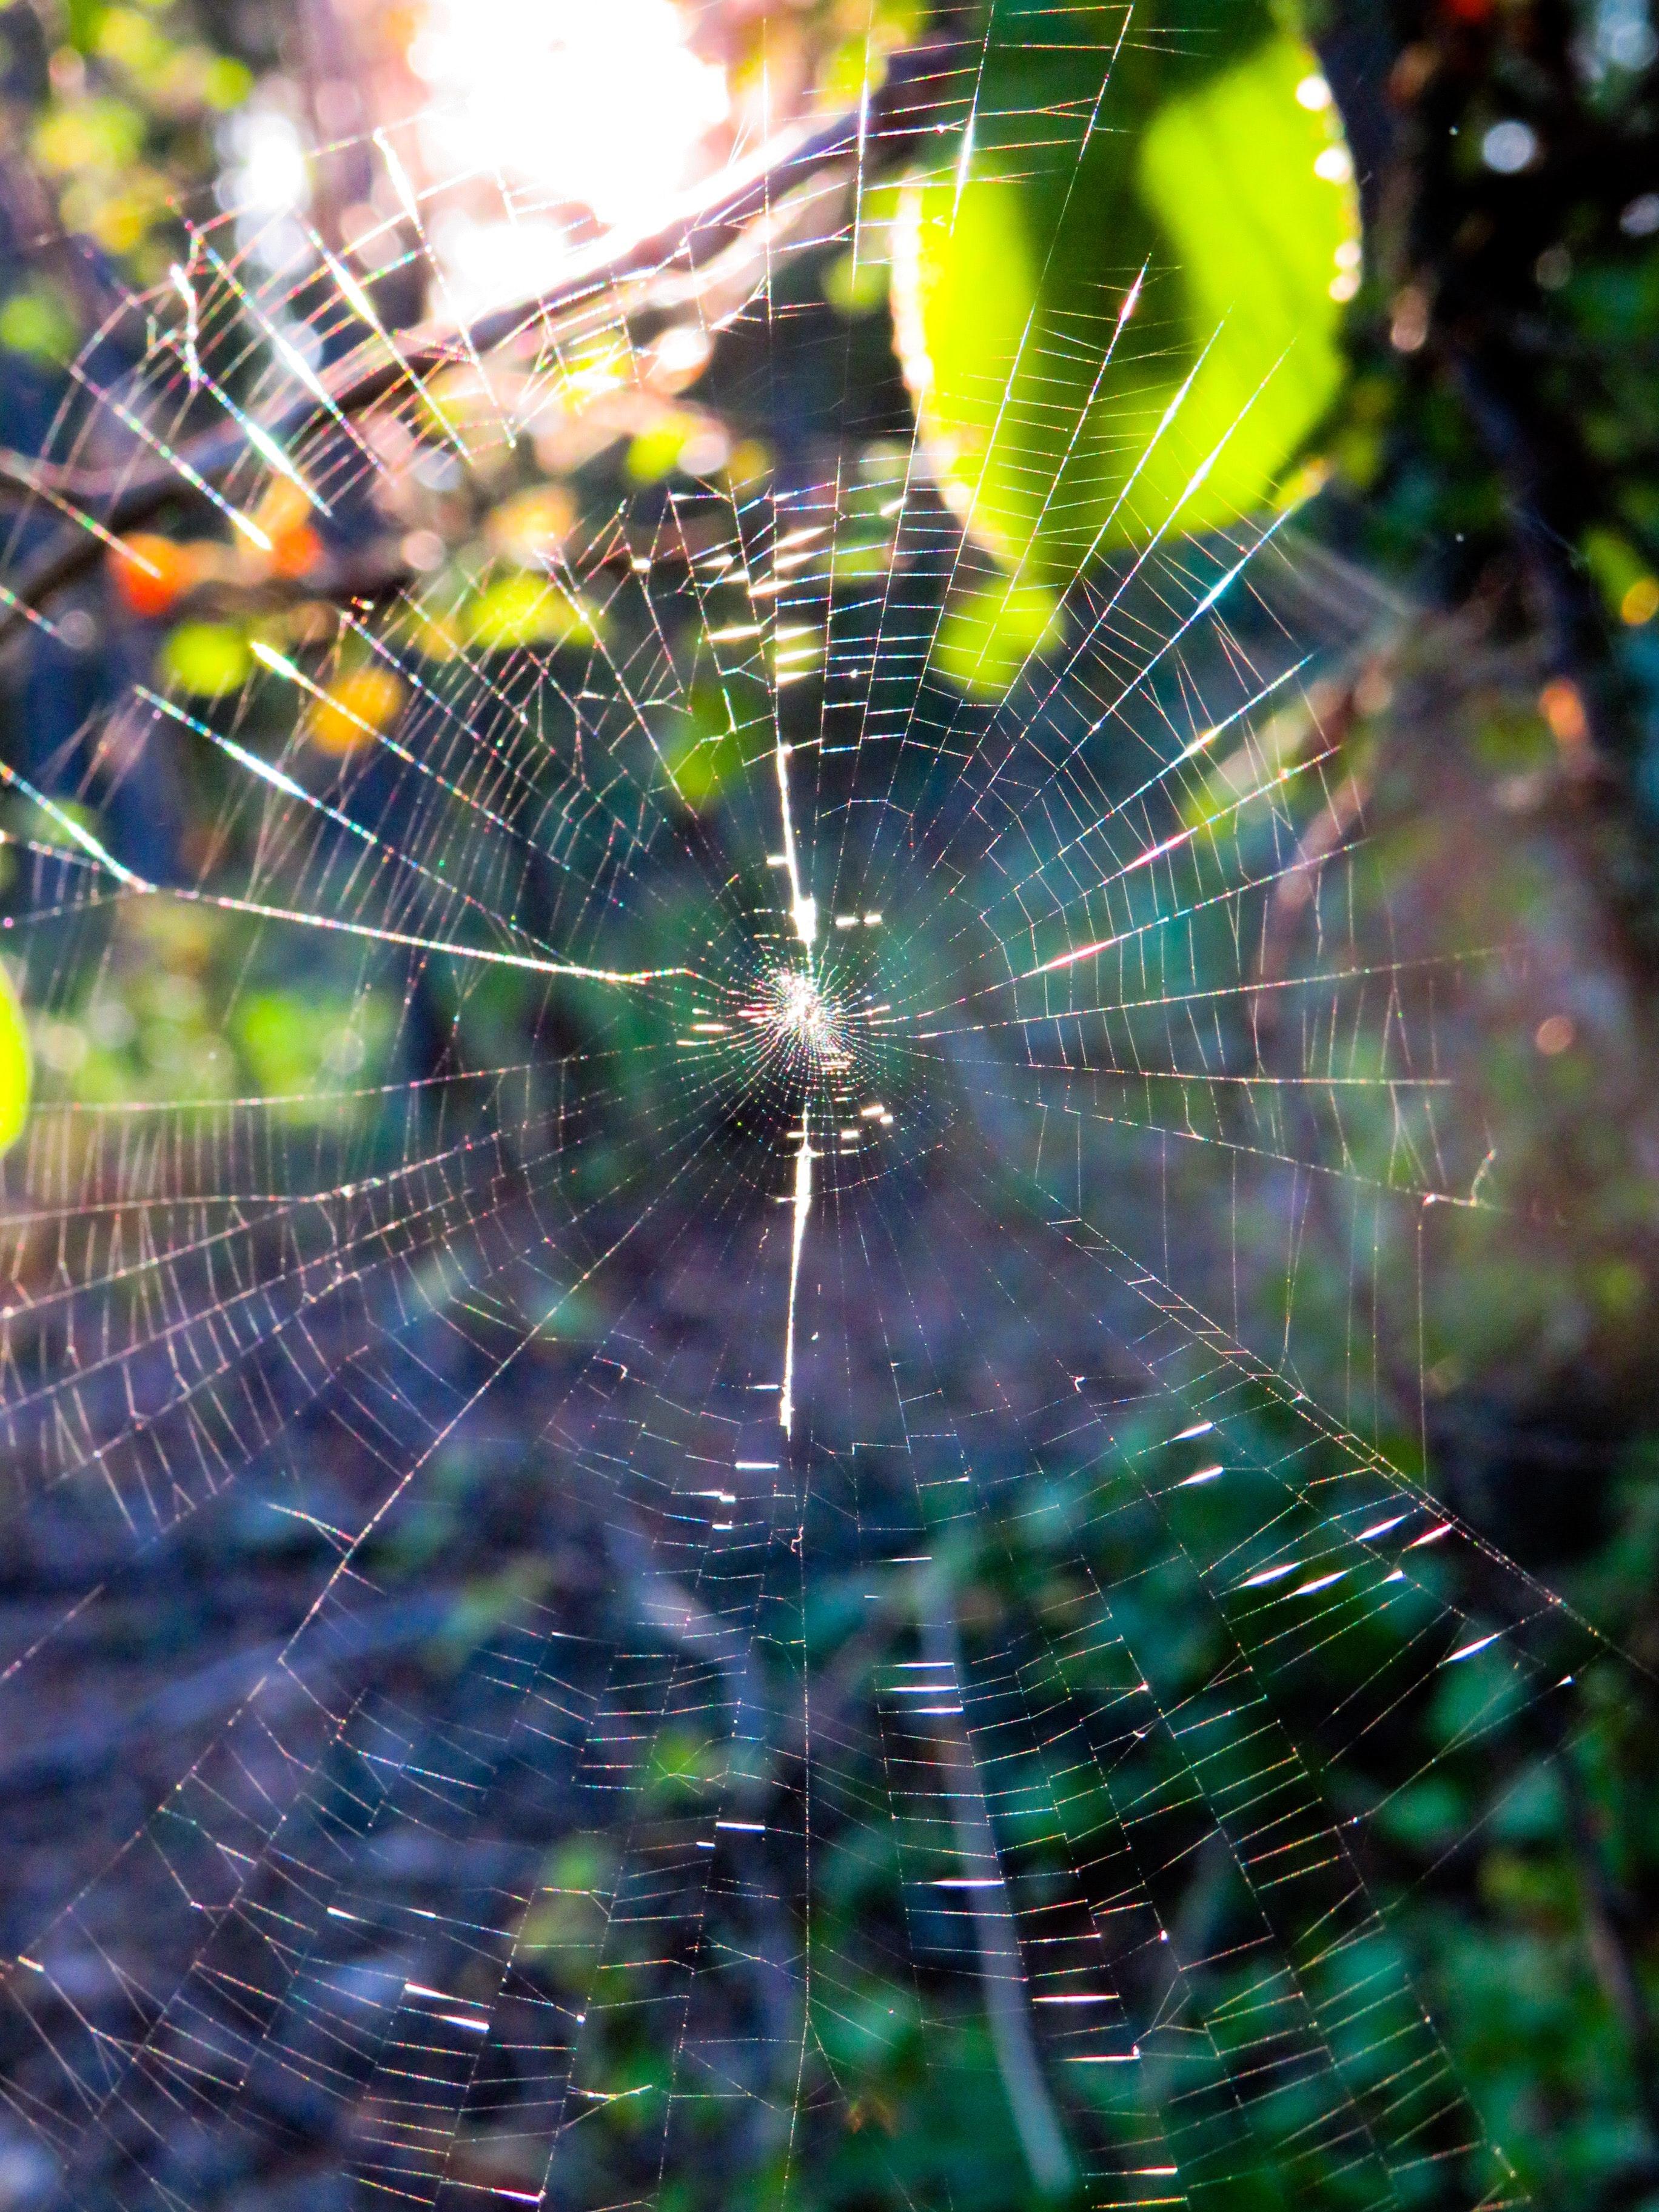 Photo of a cobweb